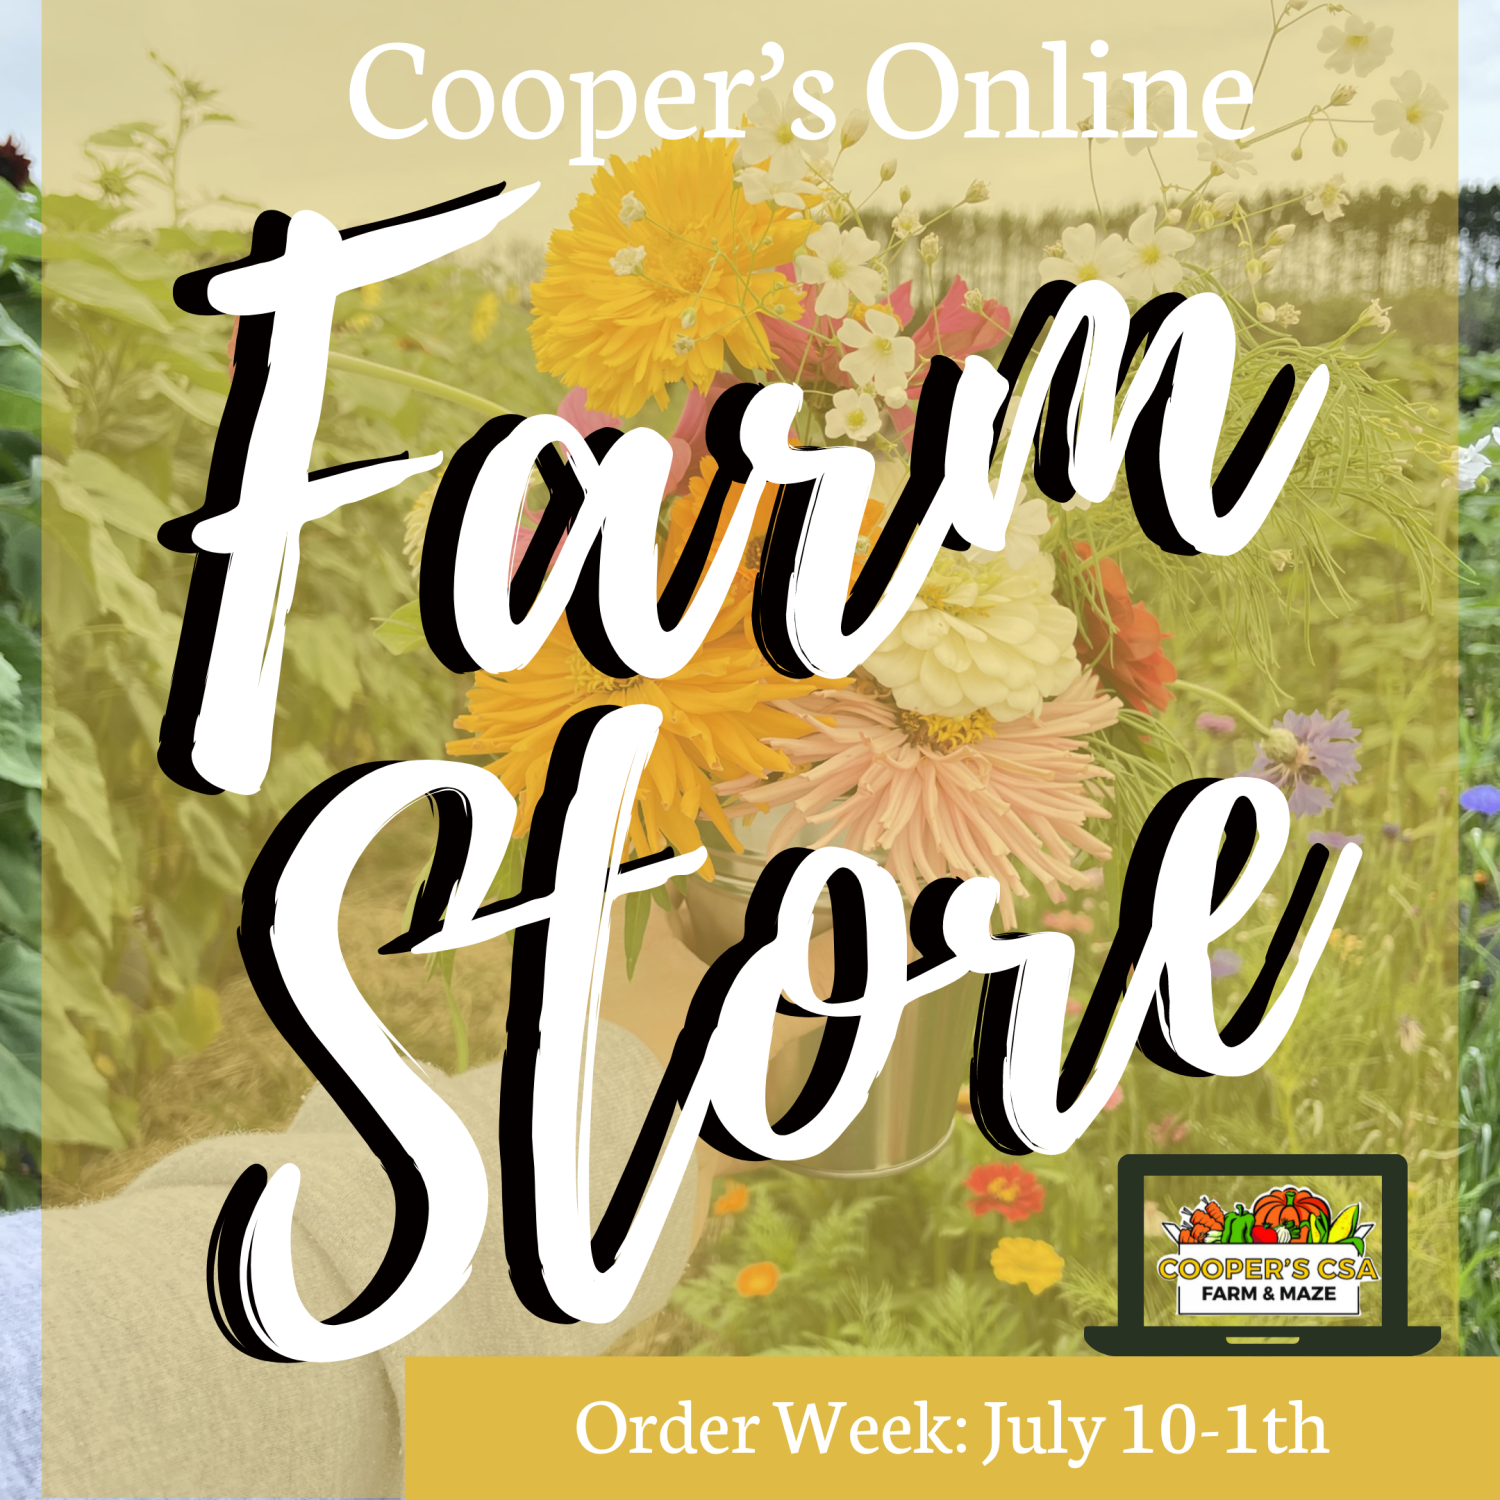 Coopers CSA Online FarmStore- Order week July 10-13th